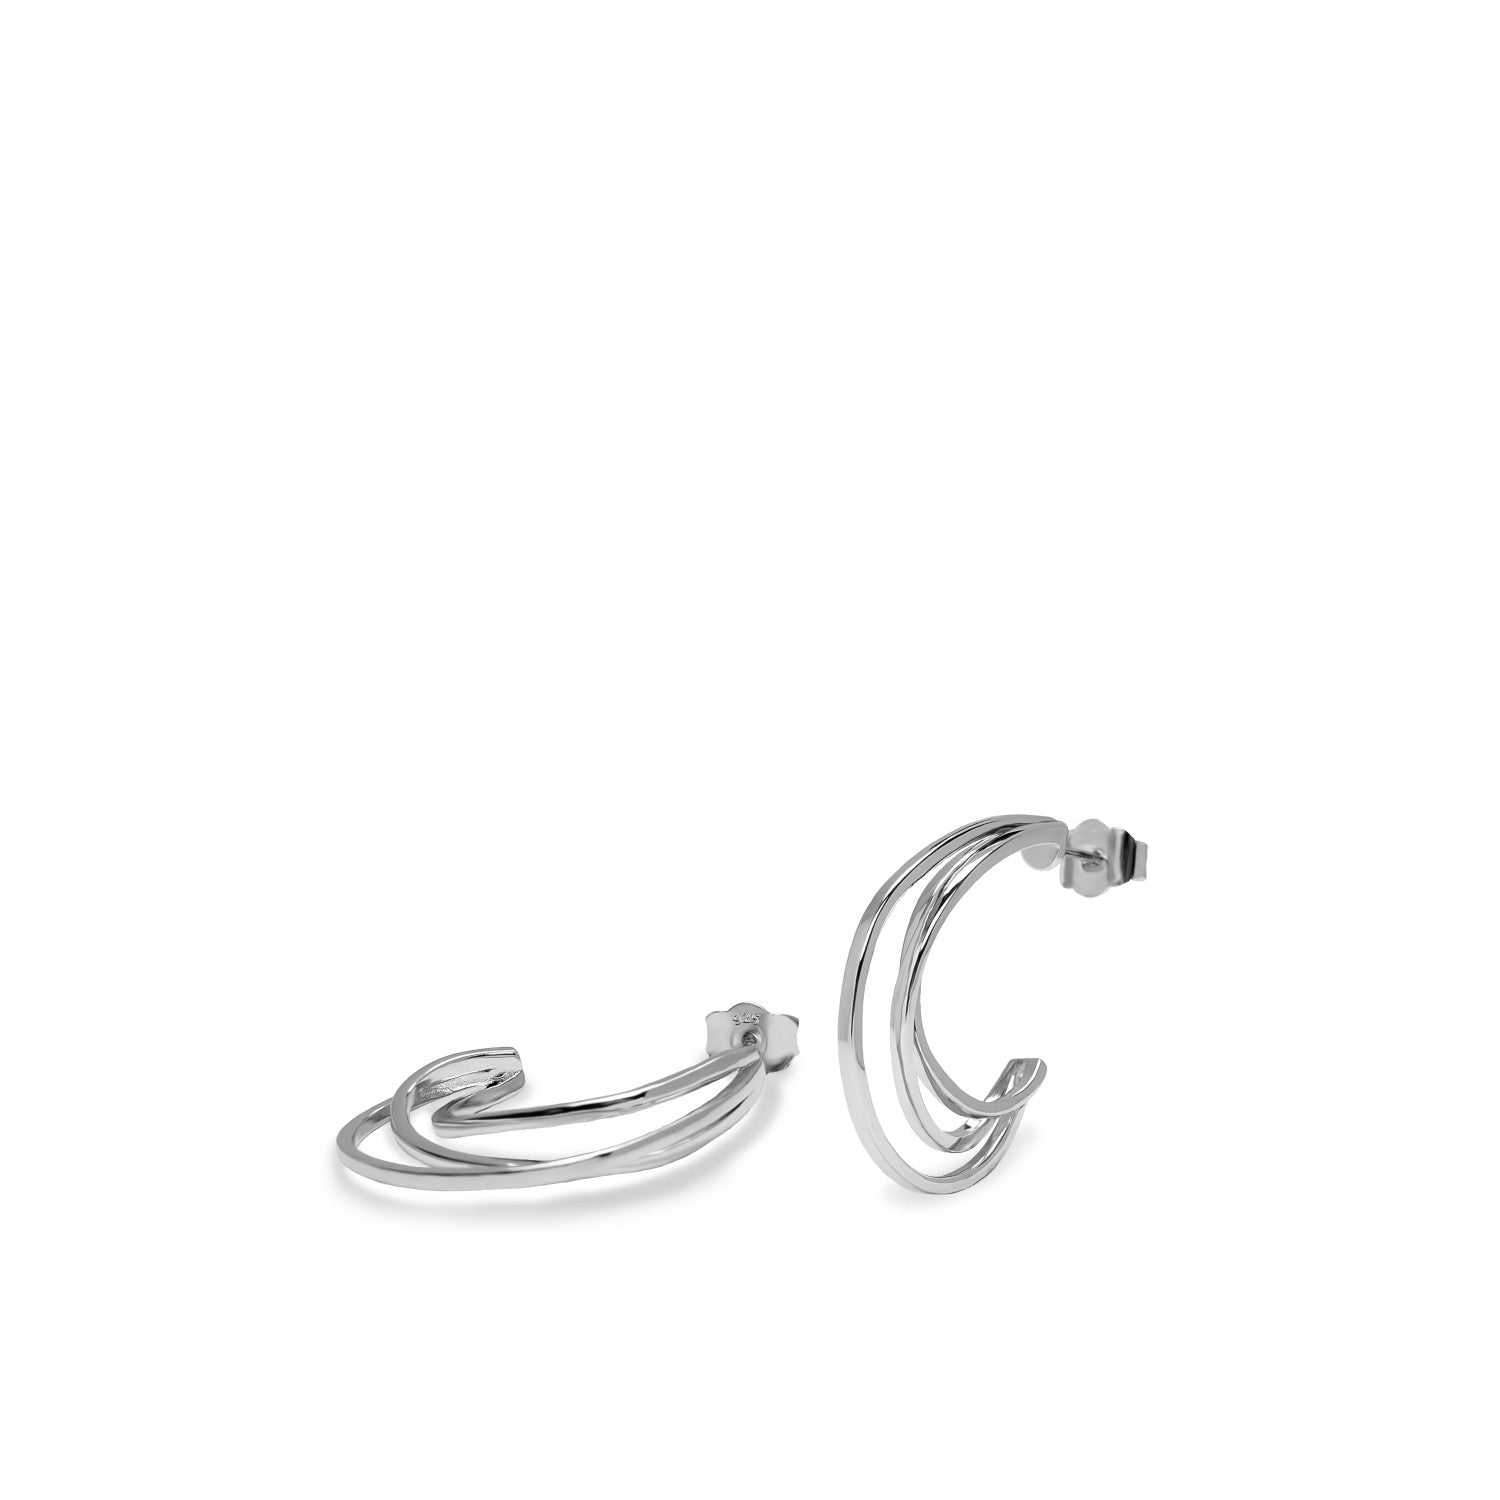 Earrings ring original design with irregular rails